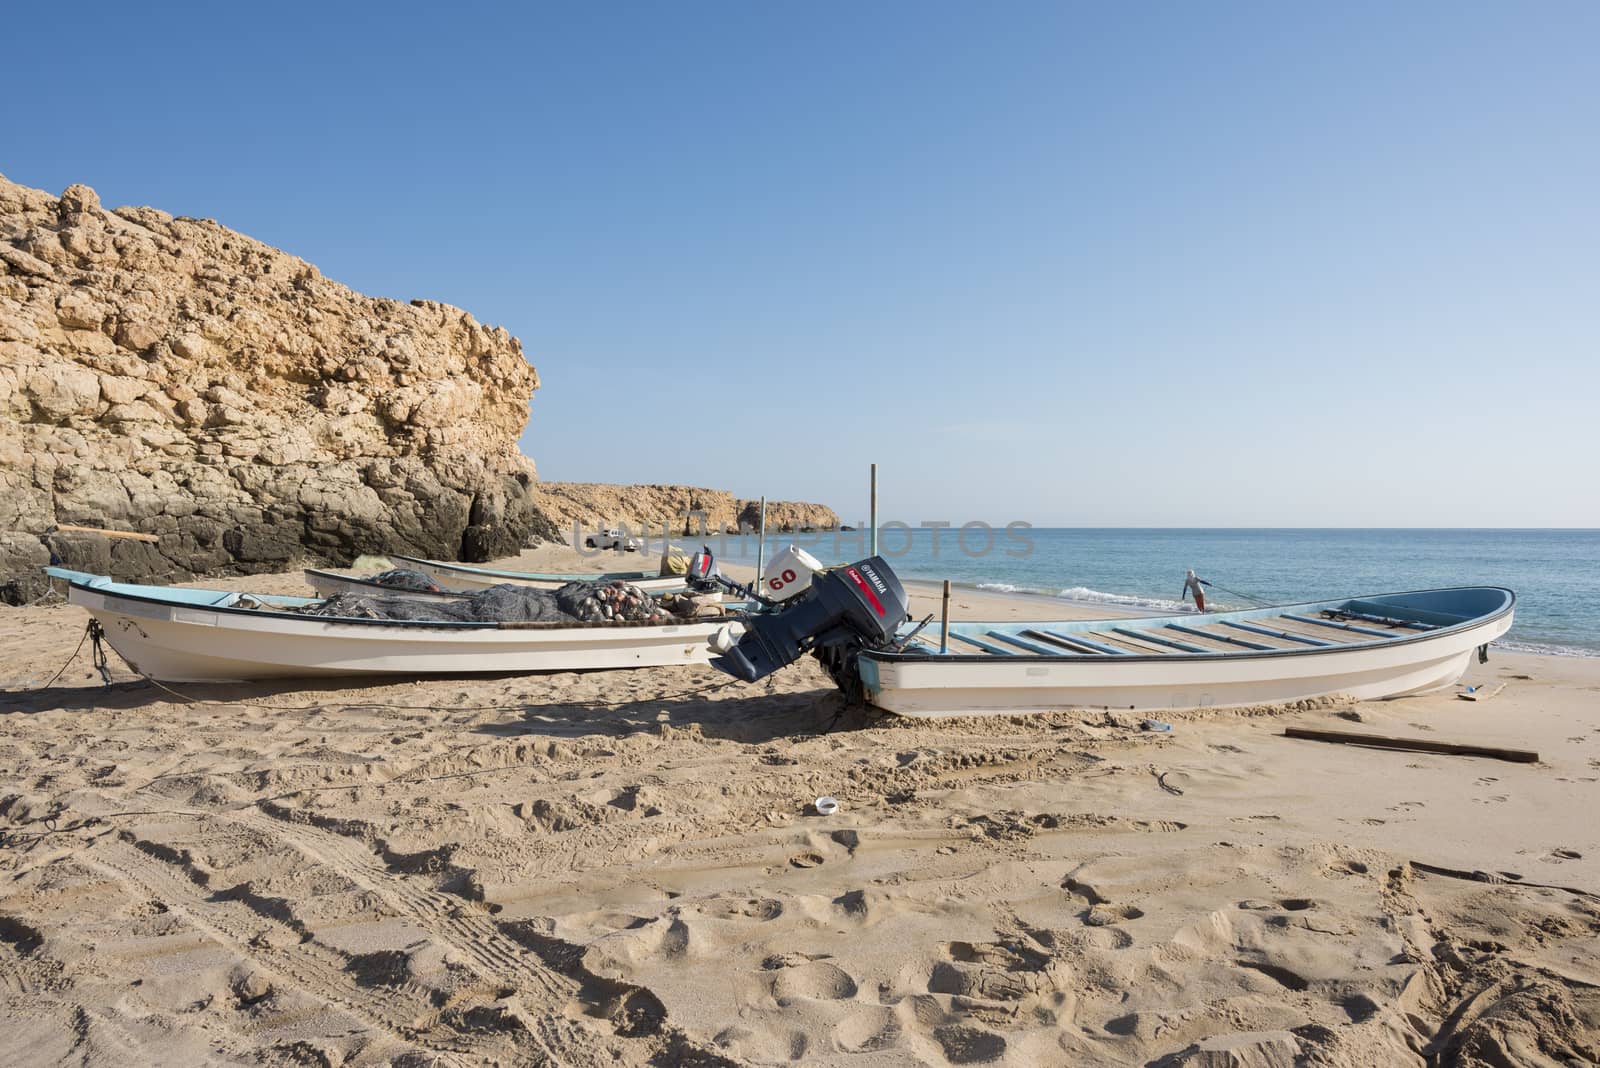 Fishermen on the beach of Ras Al Jinz, Oman by GABIS